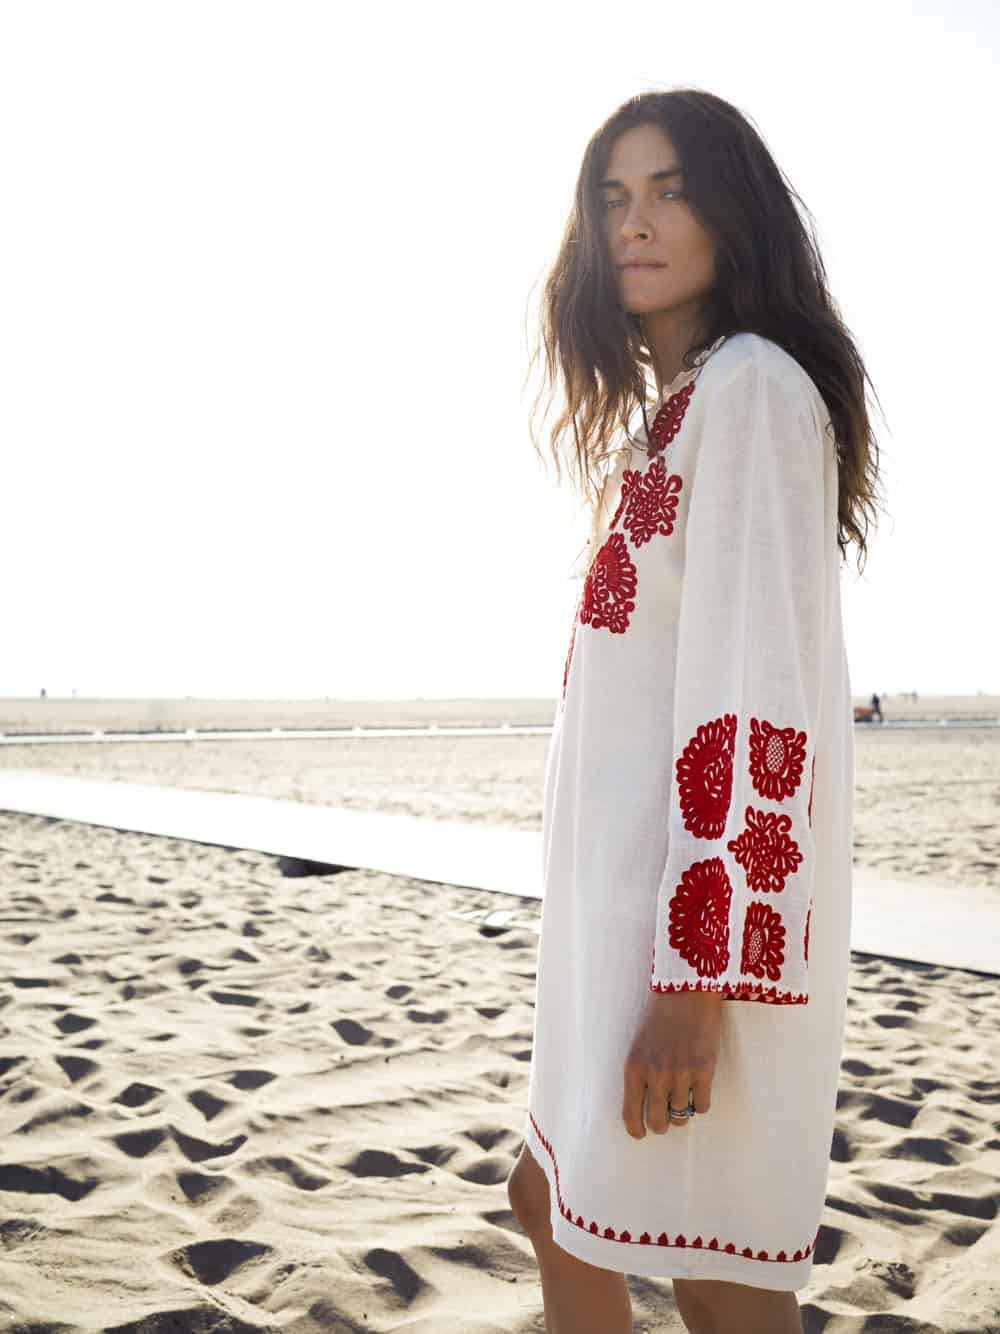 French Boho Brand Antik Batik Launches Collab With Elisa Sednaoui